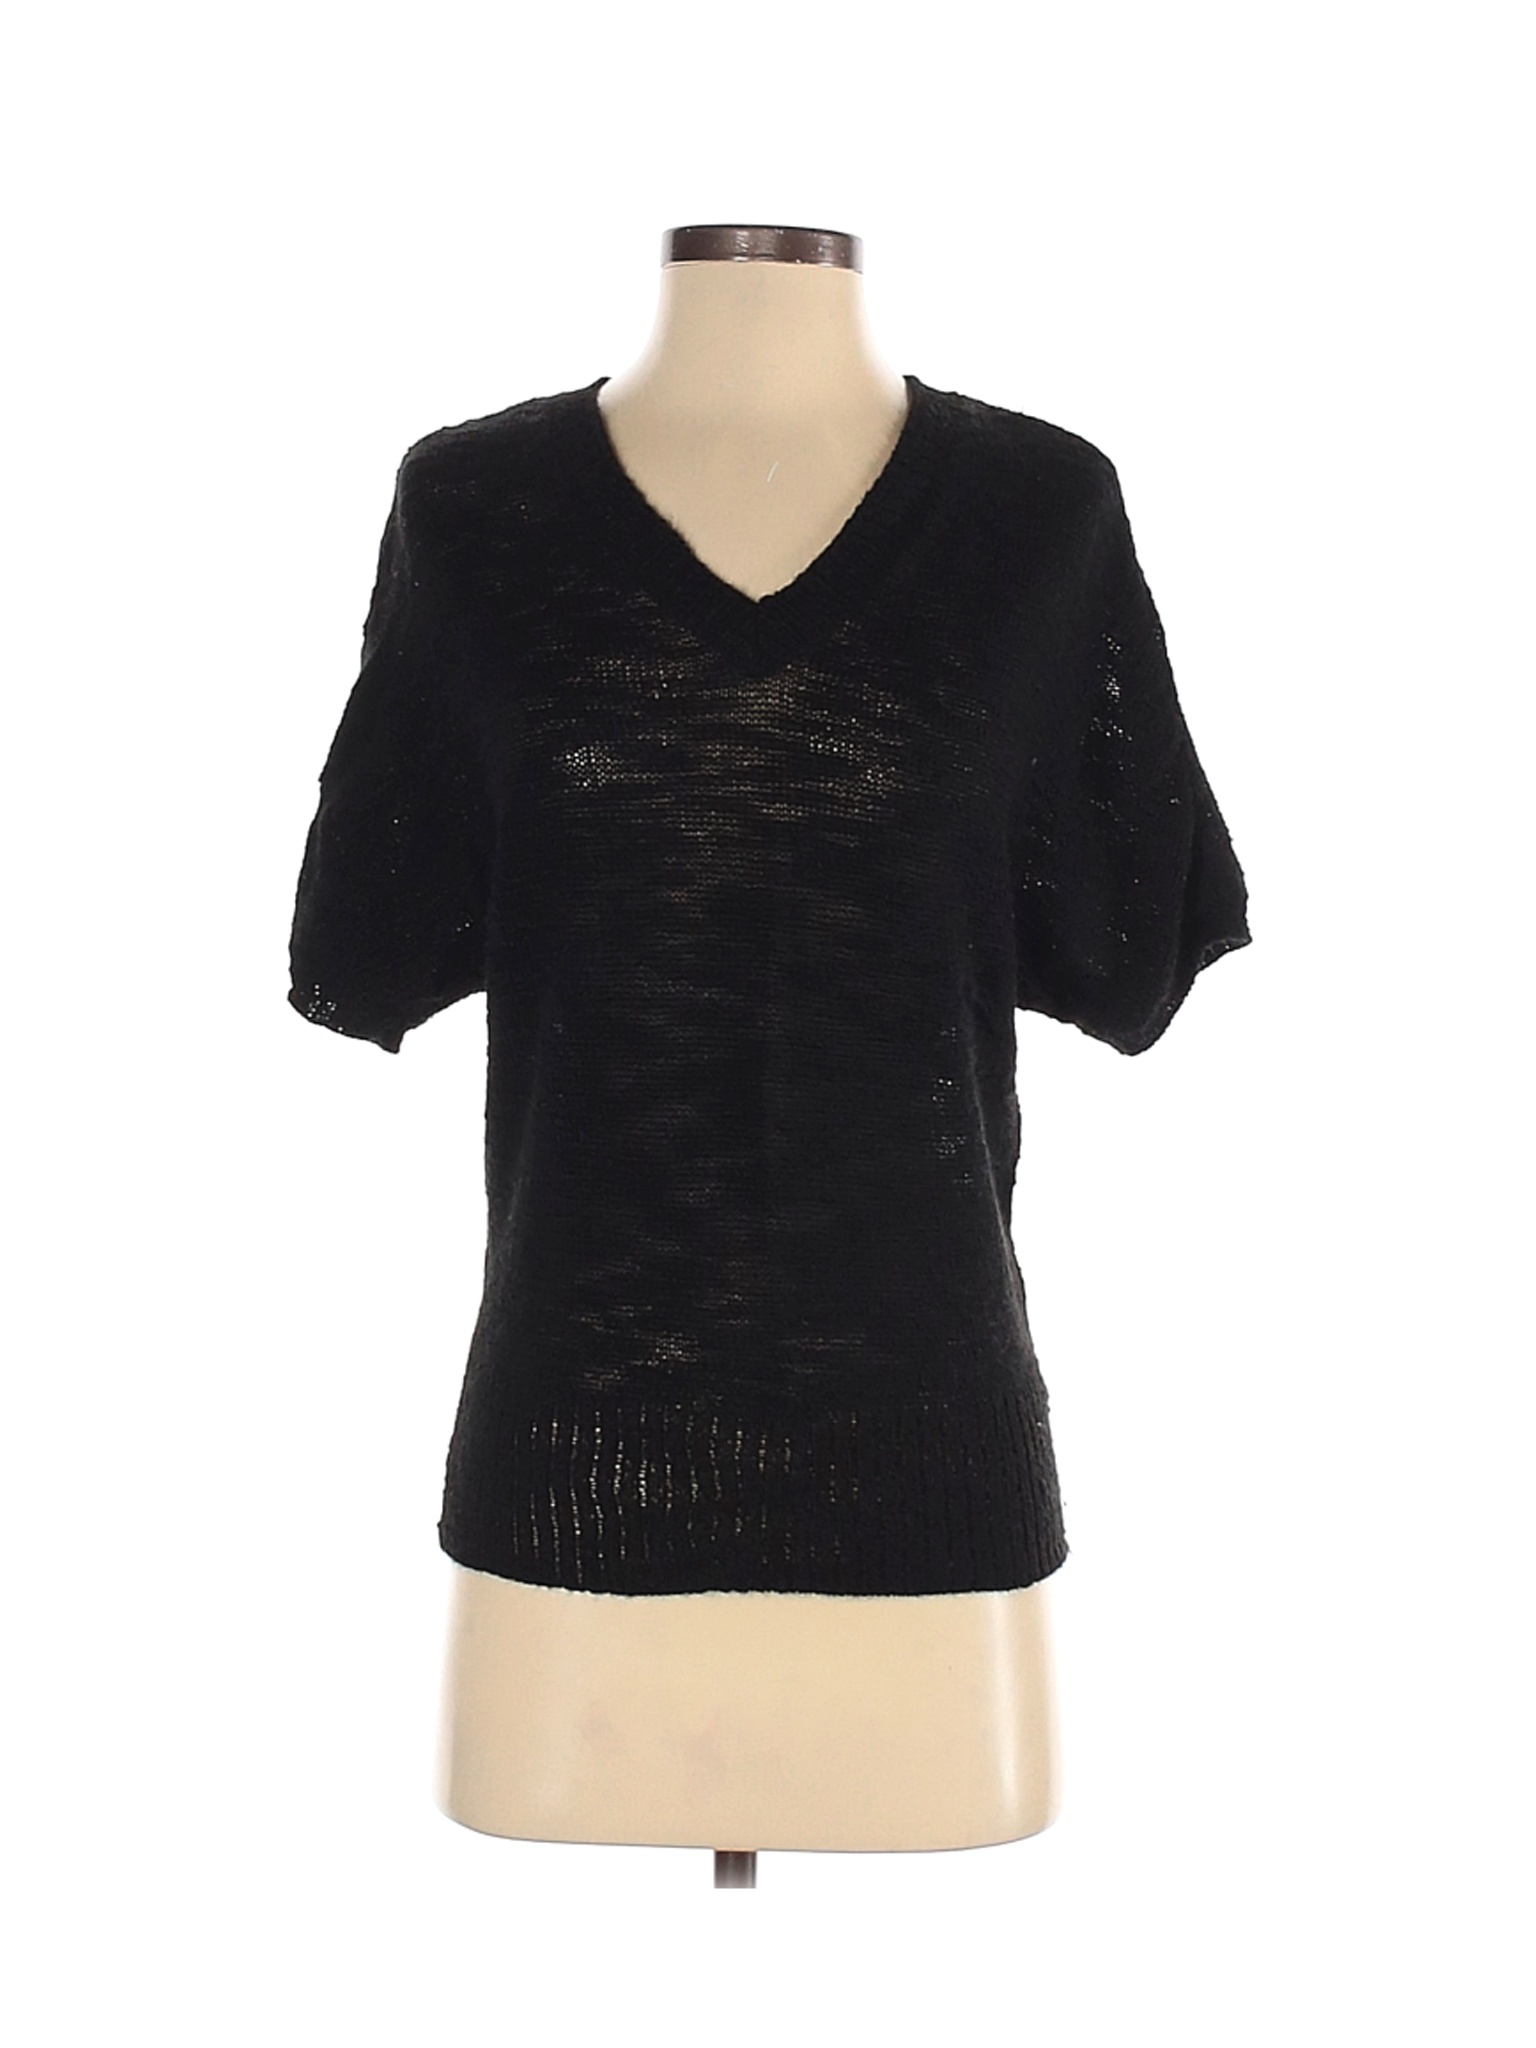 Gap Women Black Pullover Sweater XS | eBay